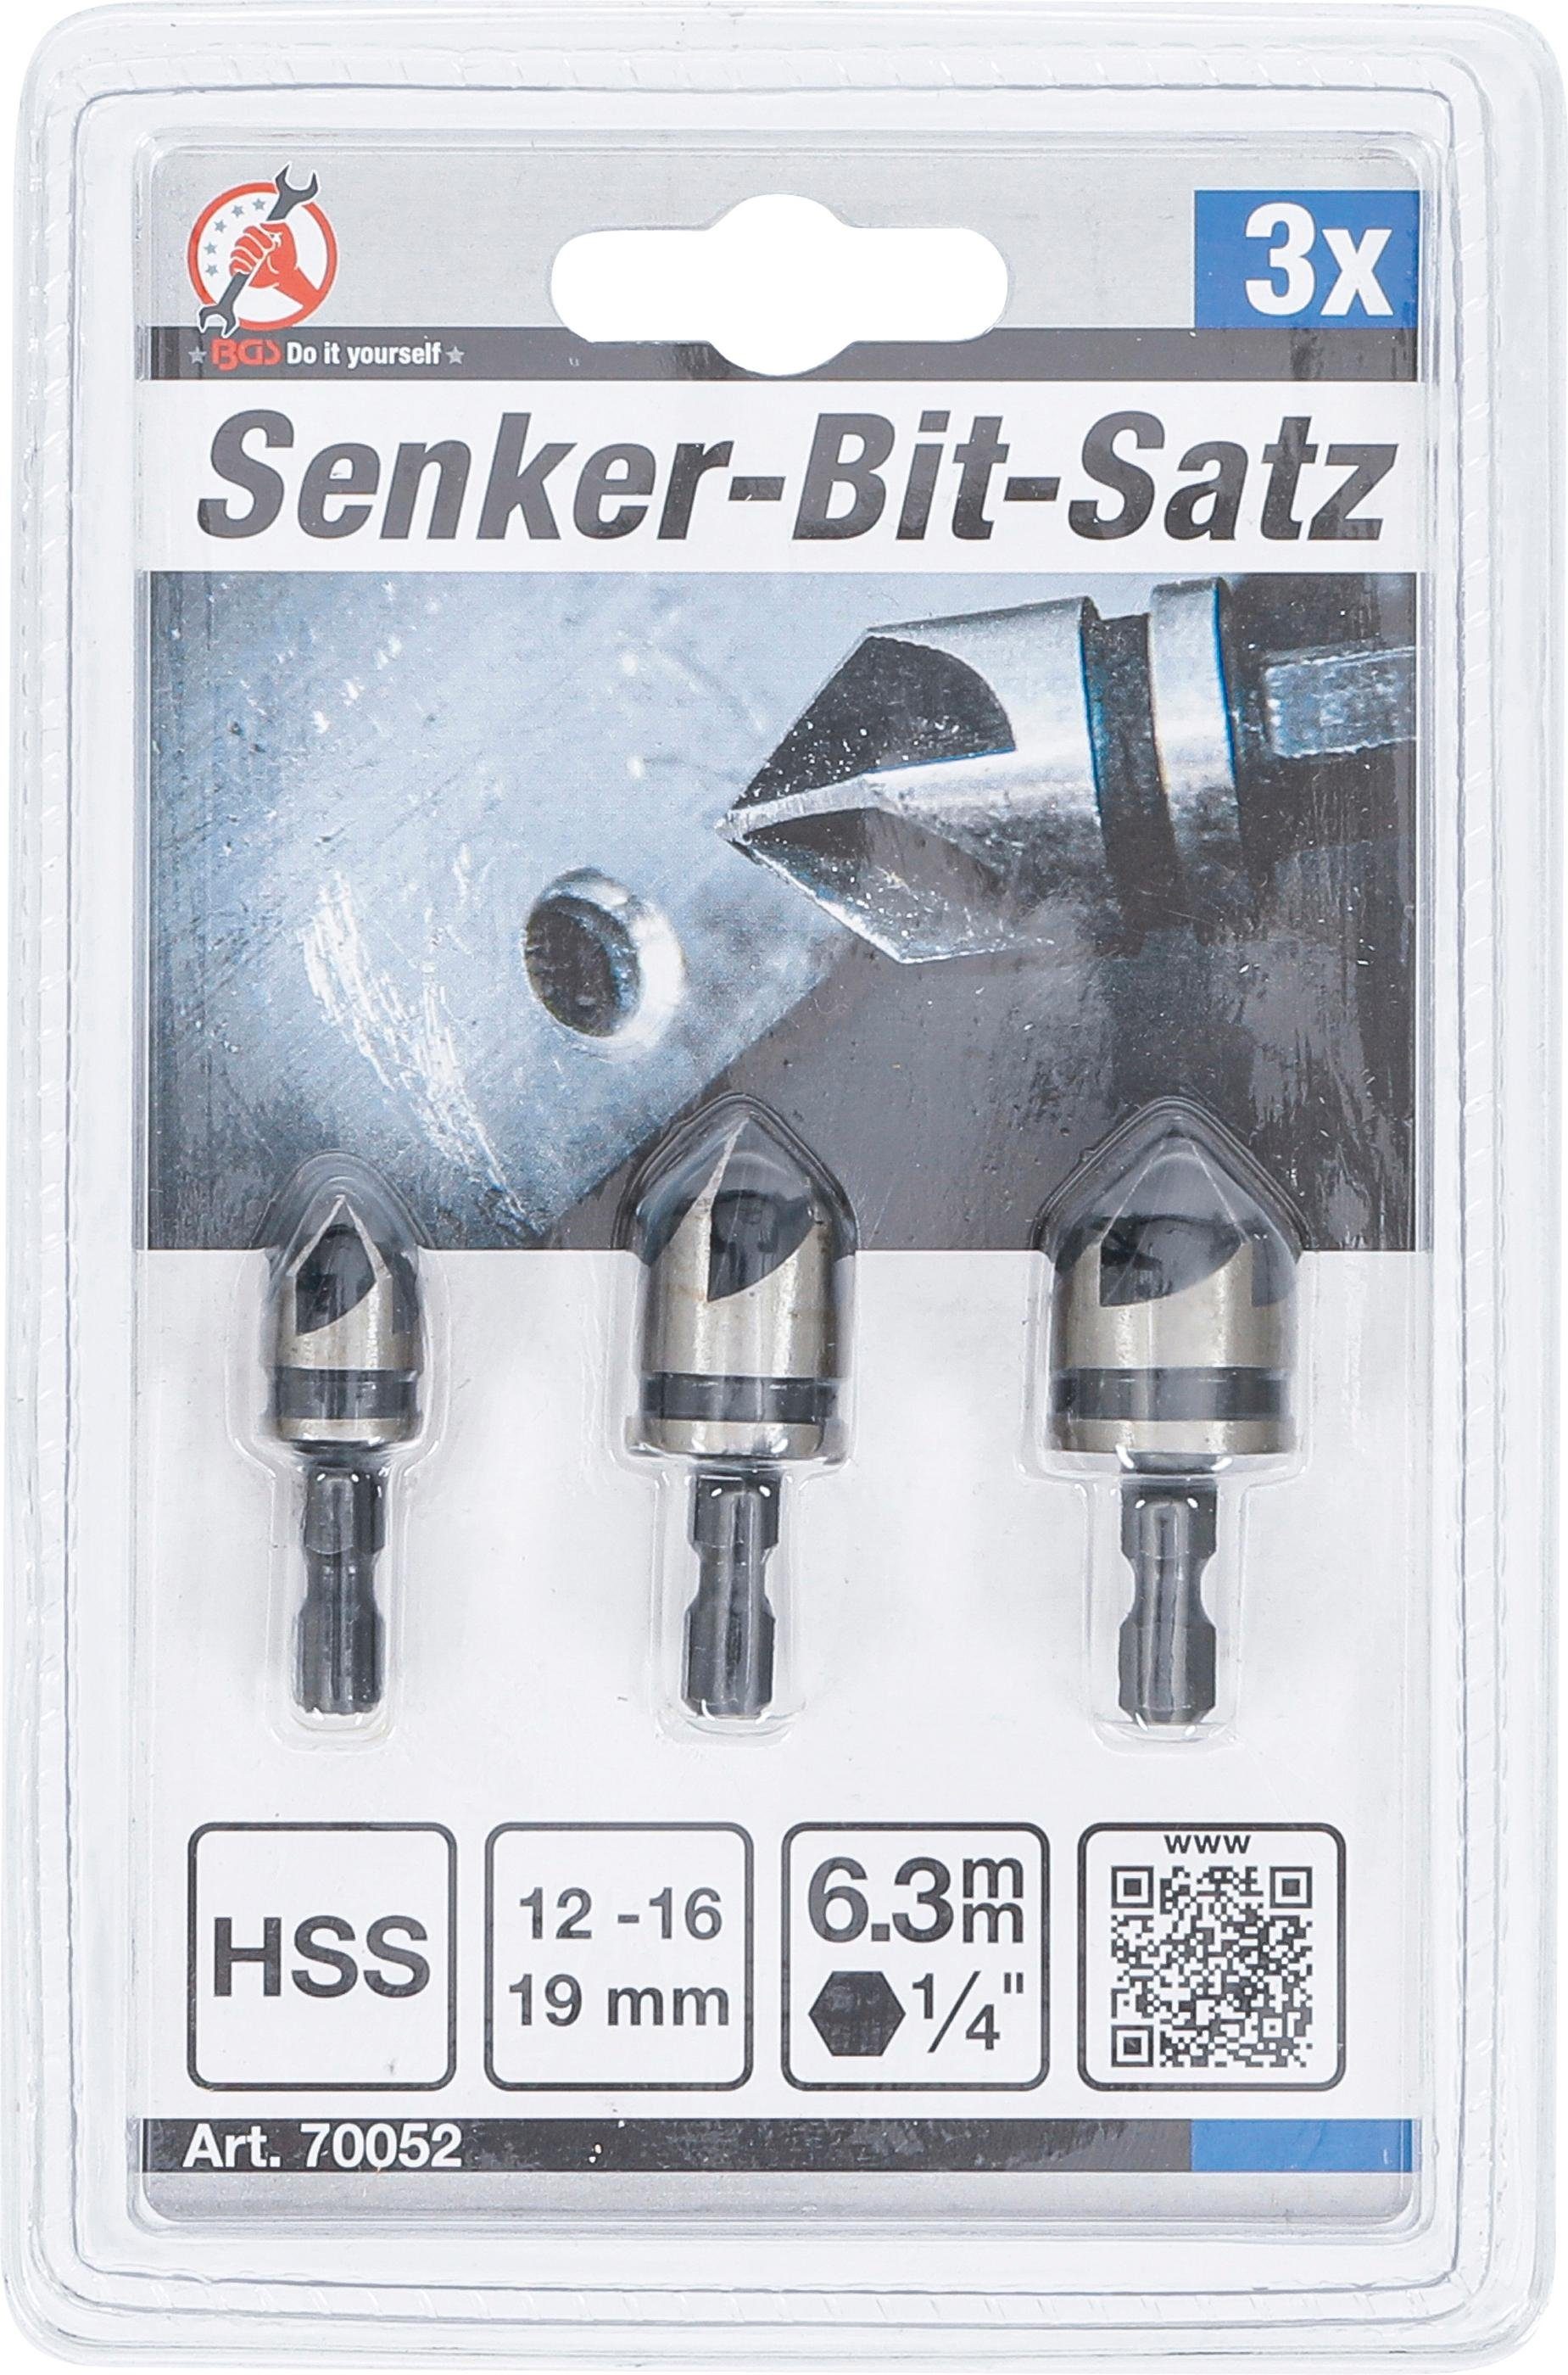 BGS - - Senker-Bit-Satz, HSS, Antrieb Spiralbohrer (1/4), 16 6,3 mm mm, 19 12 technic 3-tlg.